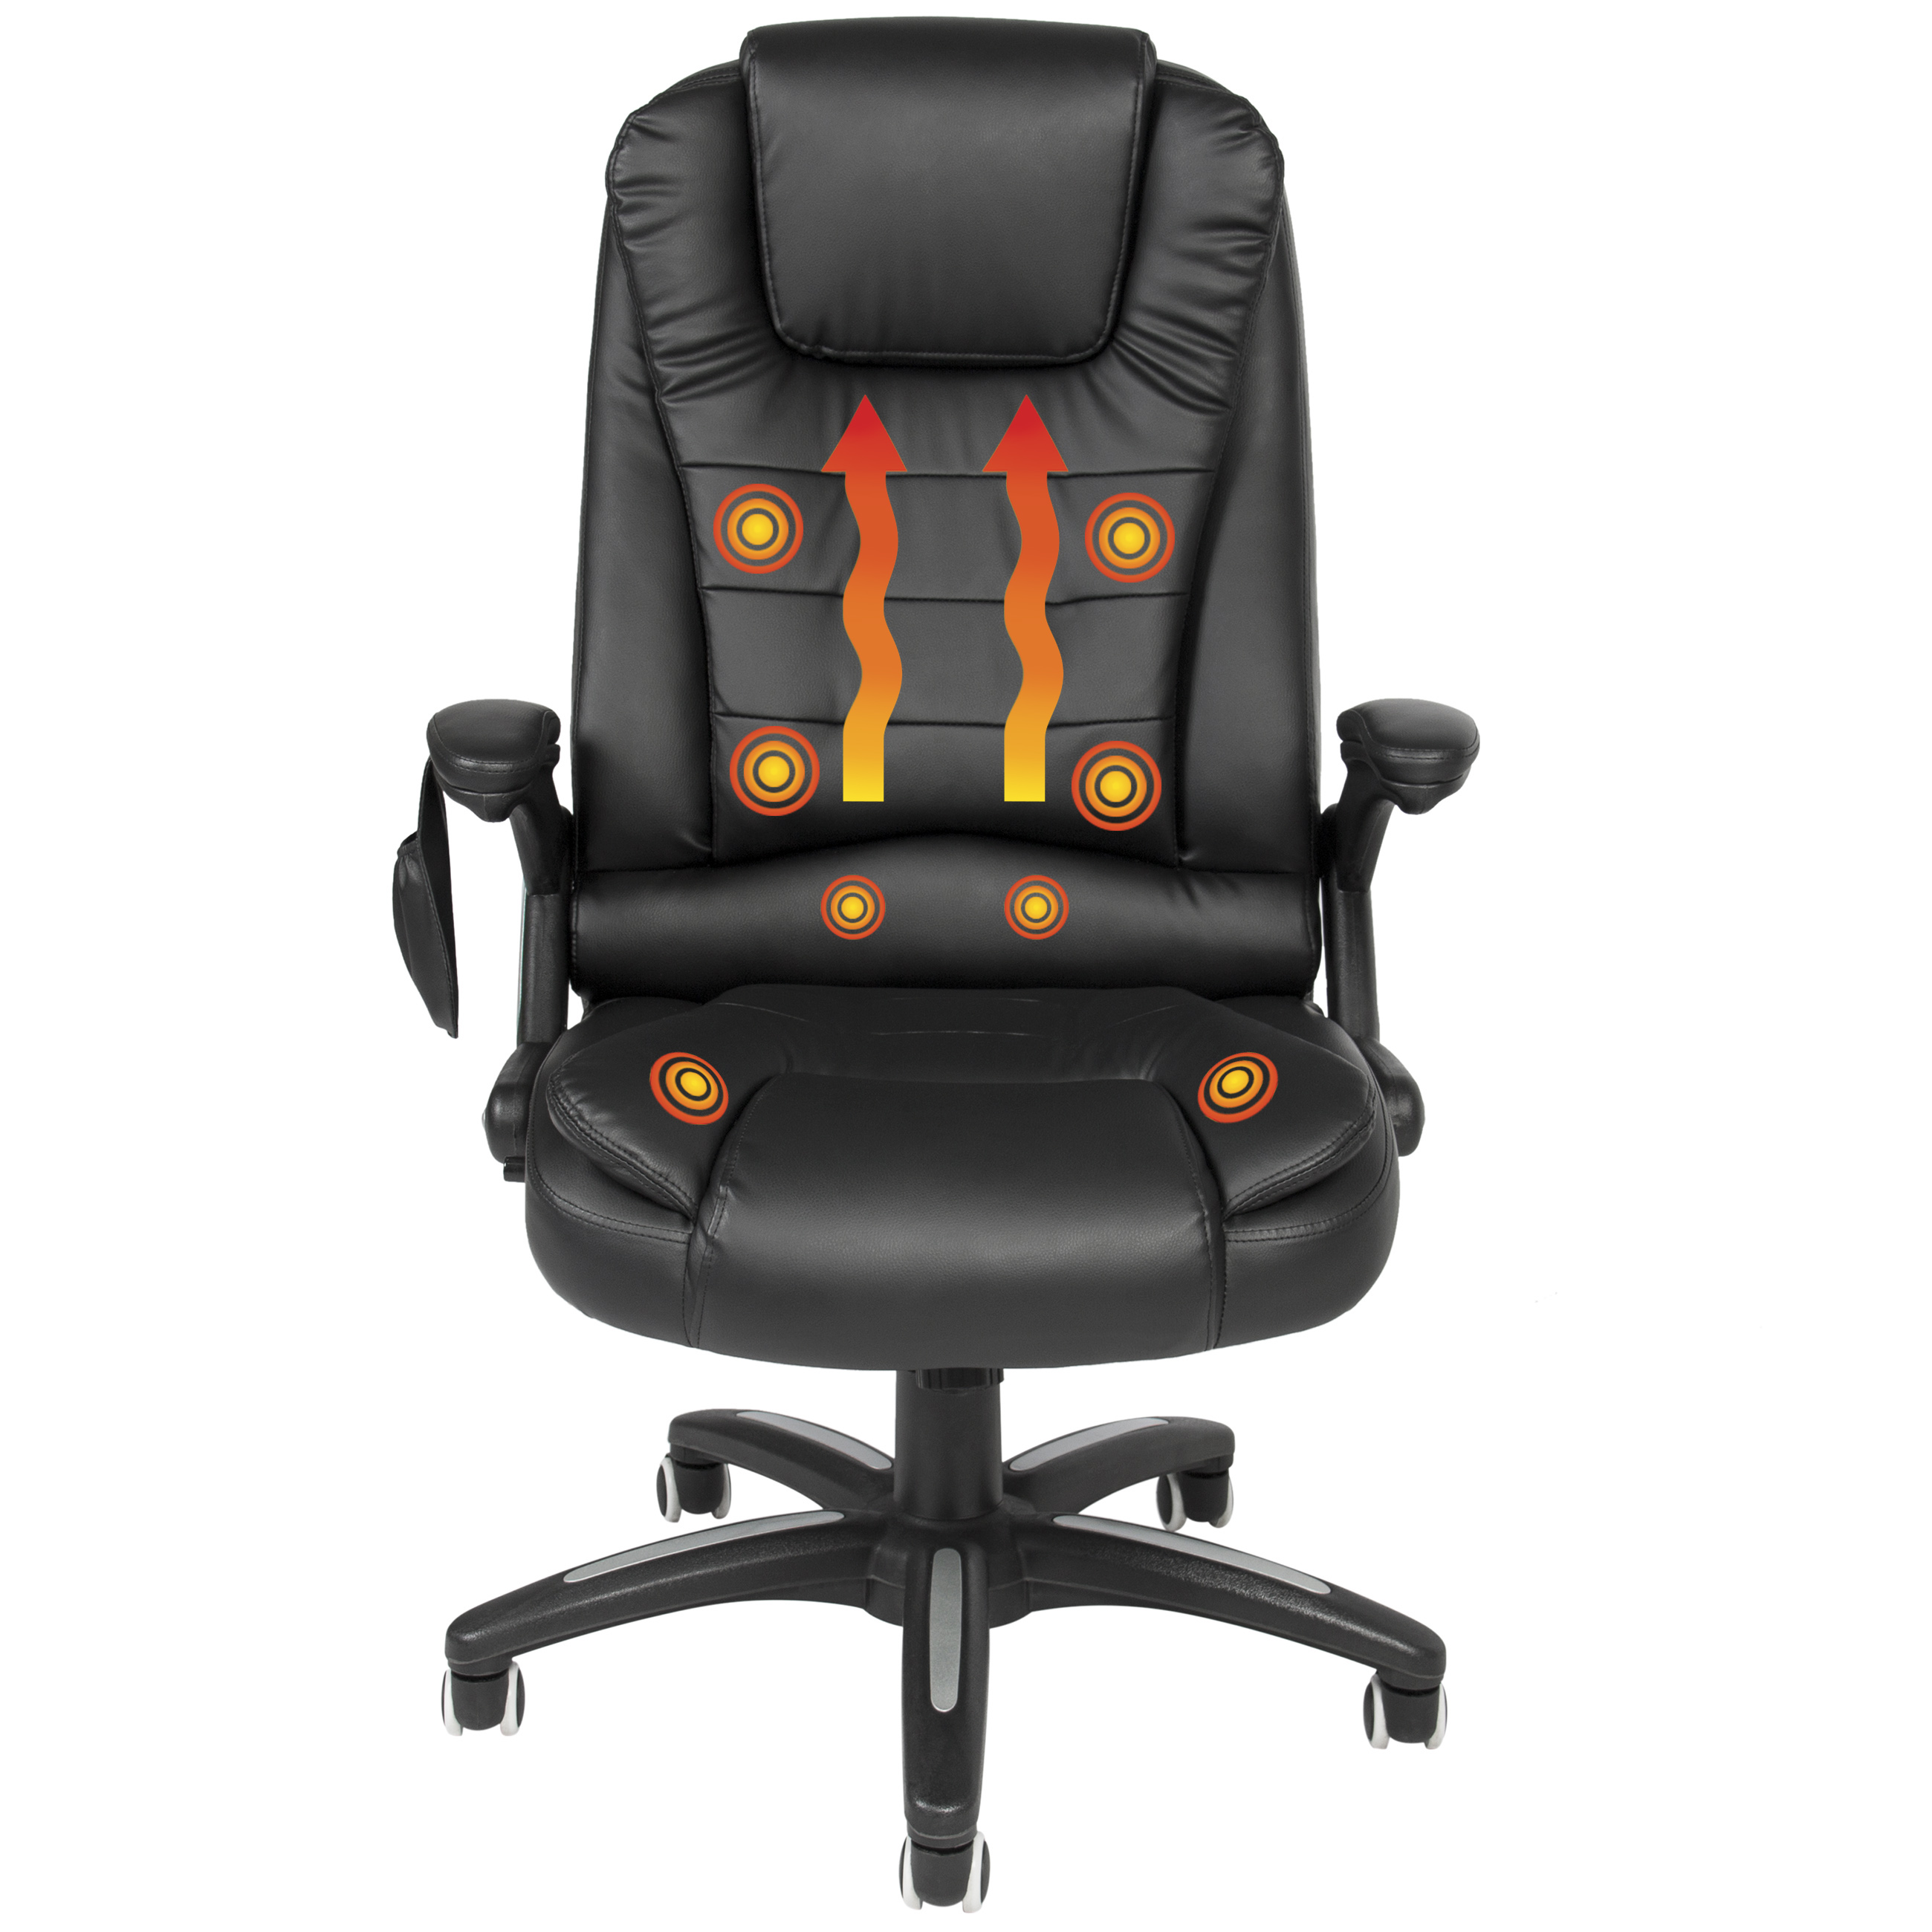 Bcp Executive Ergonomic Heated Vibrating Computer Office Massage Chair Black Ebay